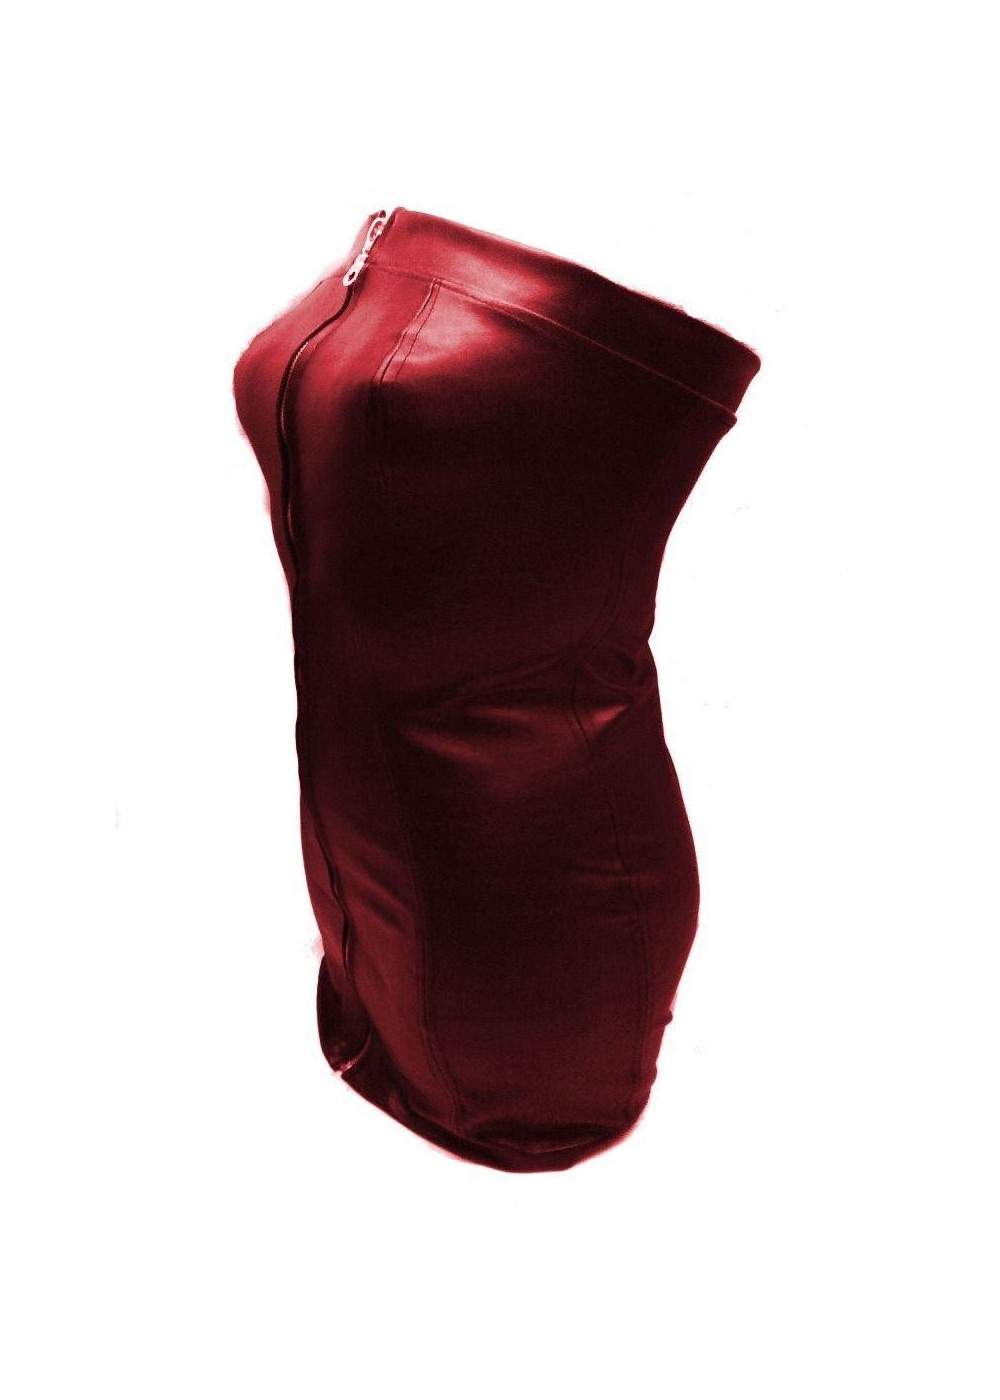 Designer leather dress red size L - XXL (44 - 52) 42,35 € - 